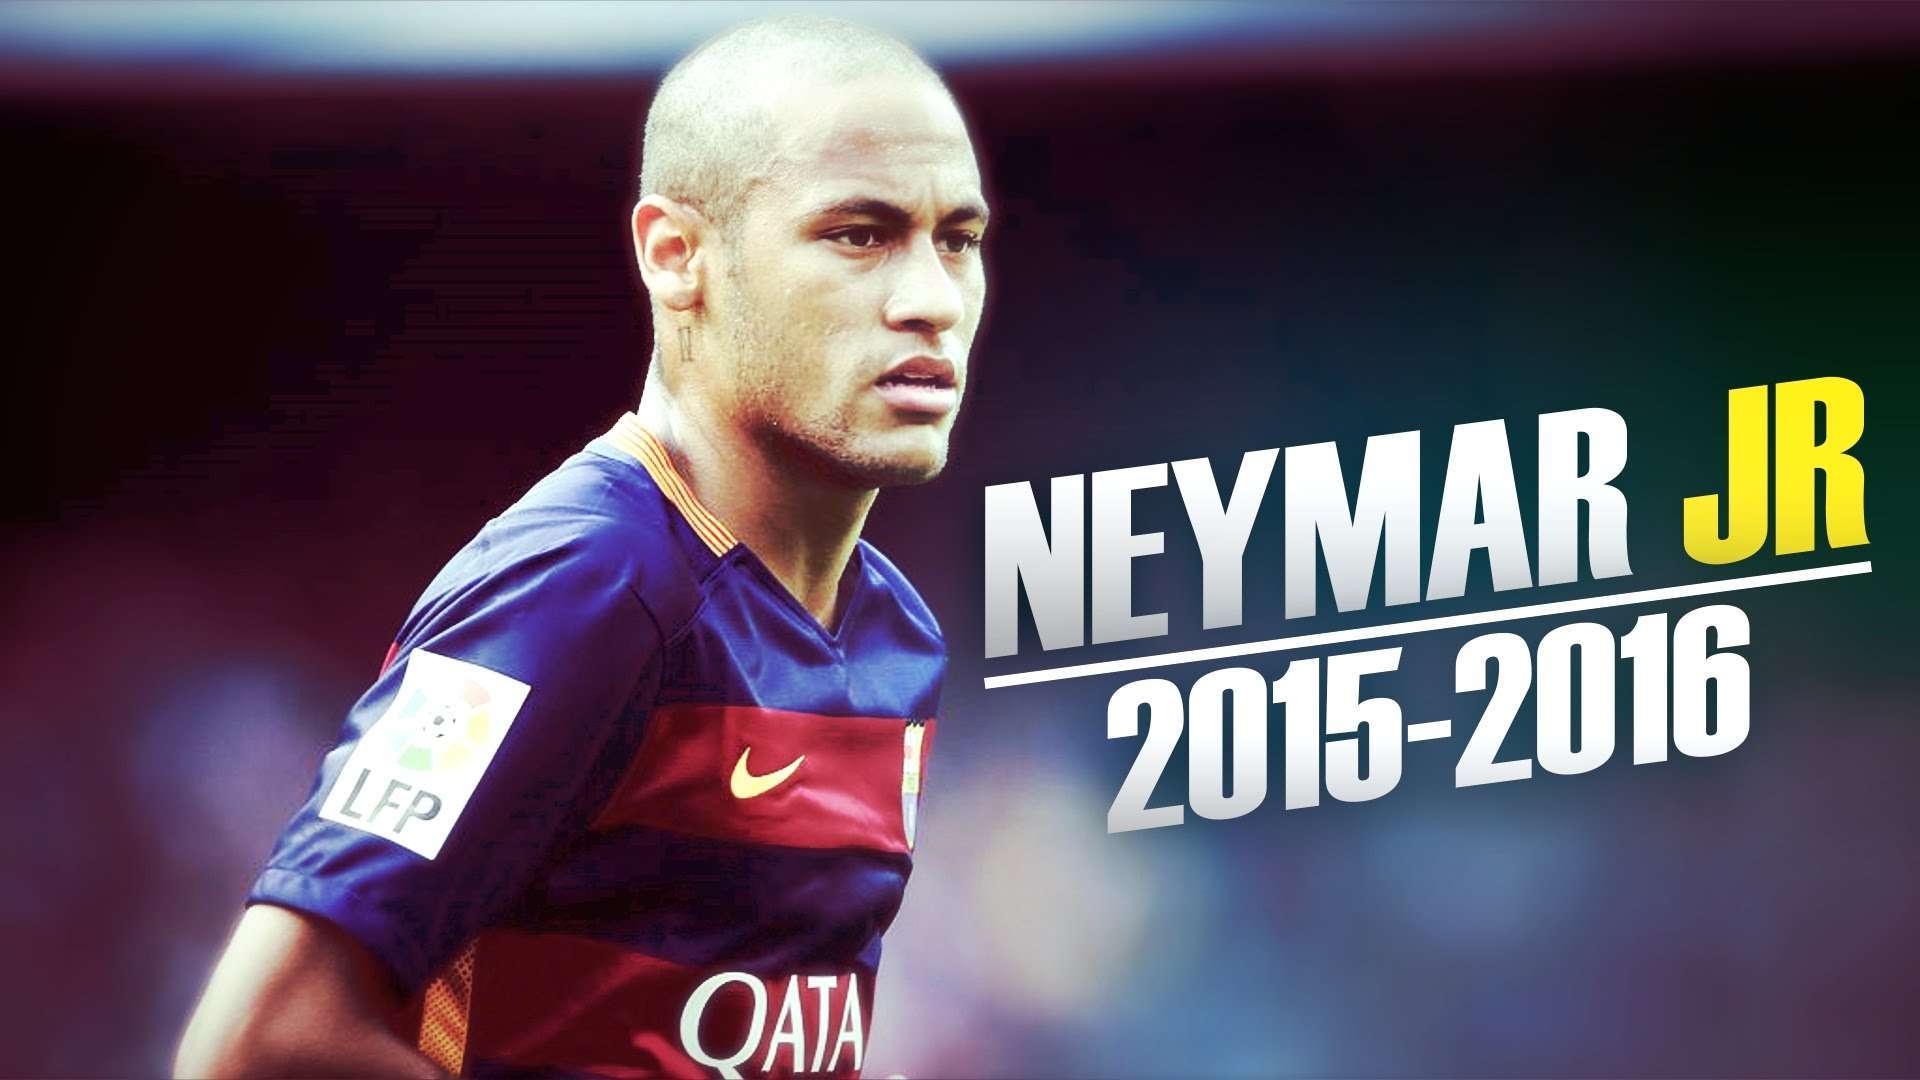 Neymar HD Image Ambwallpaper